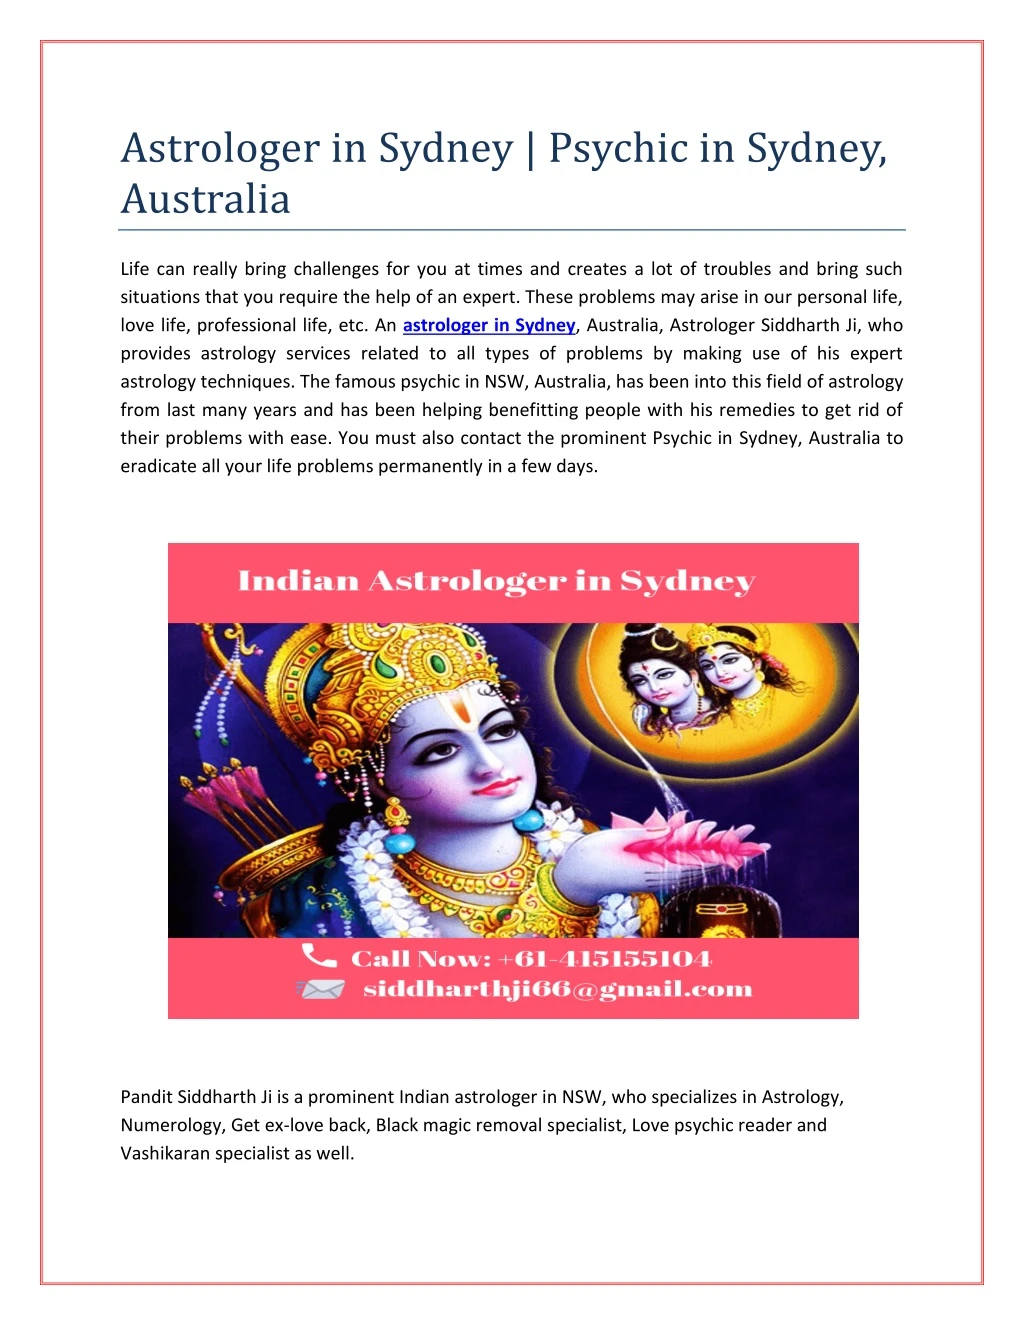 astrologer in sydney psychic in sydney australia n.